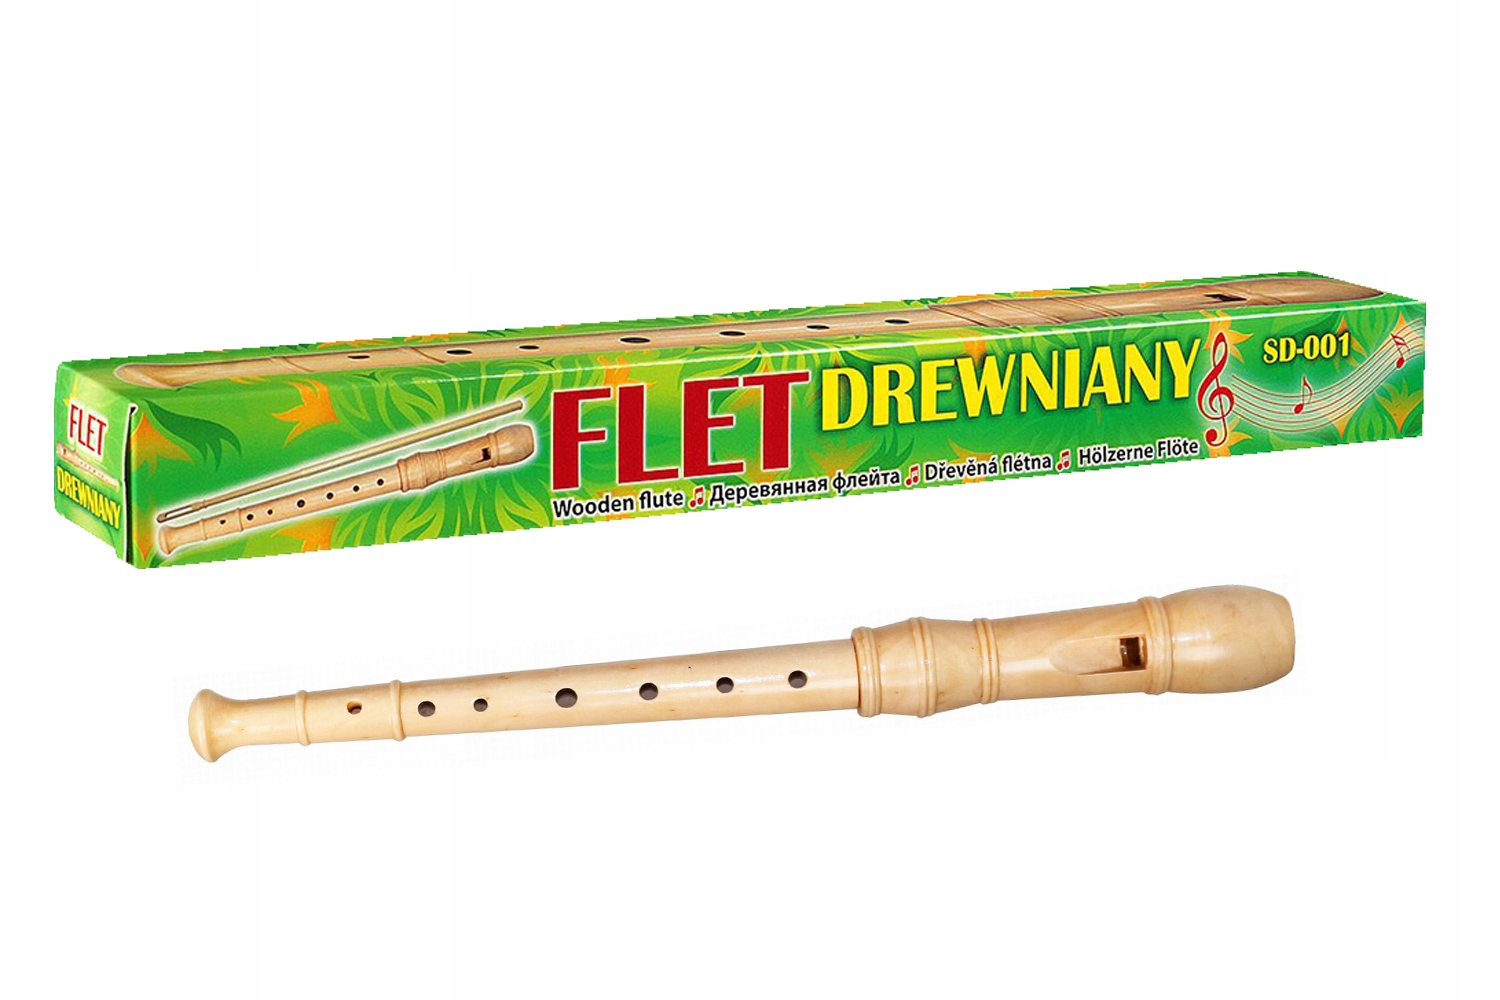 Флейта деревянная. Флейта простая. Деревянная флейта купить. Матцаханга деревянная флейта.